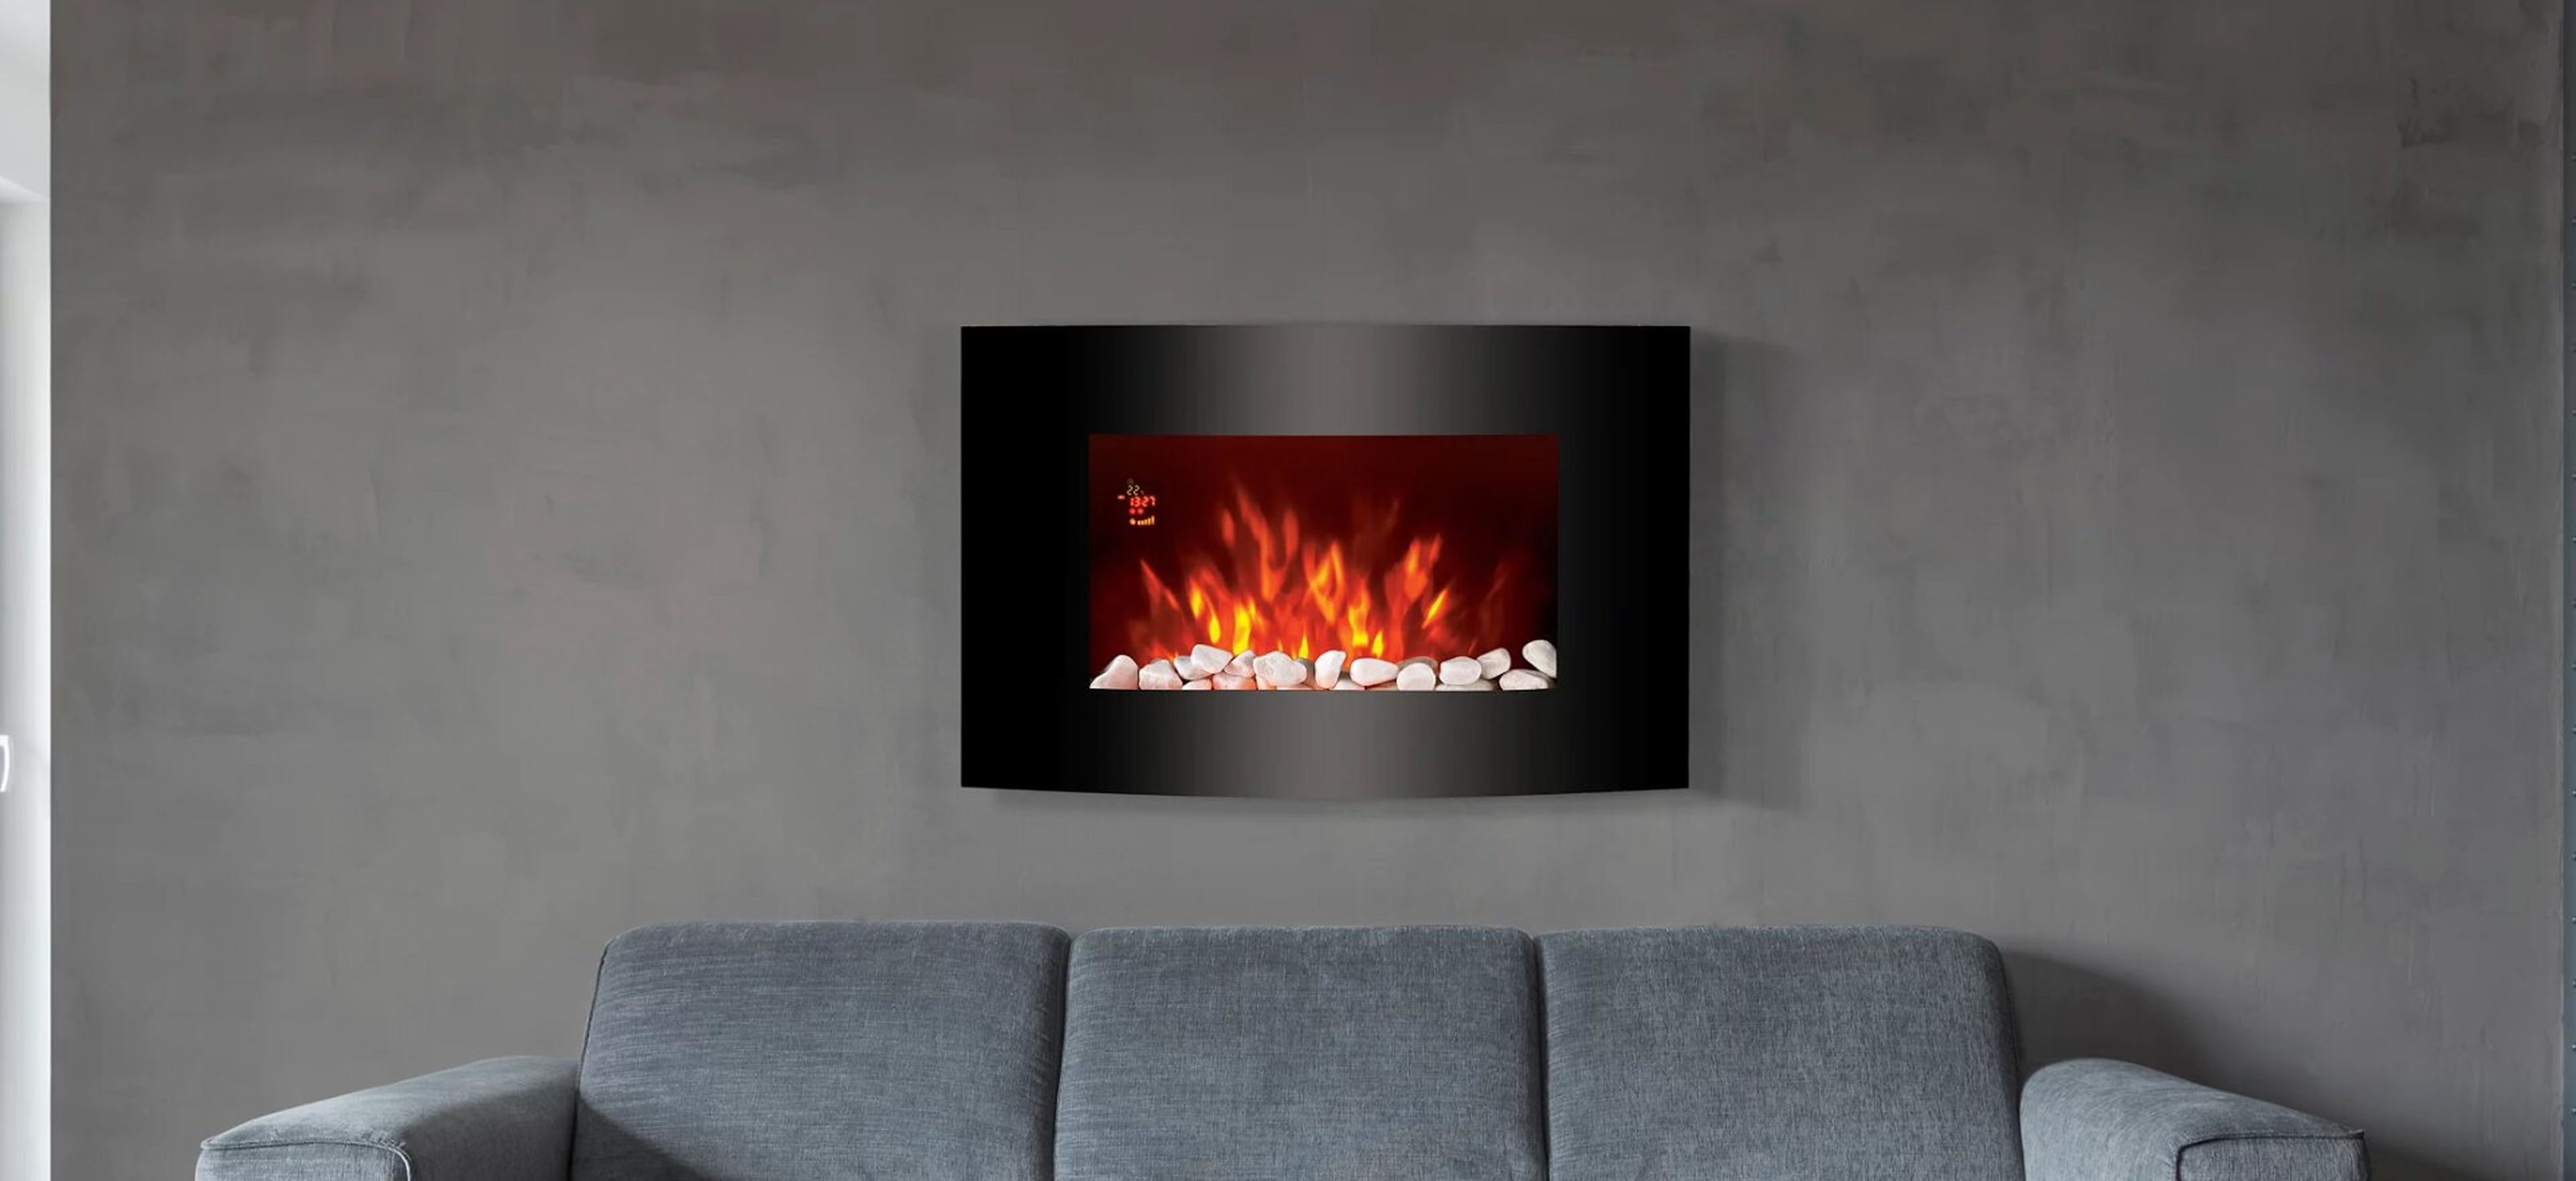 Chimenea eléctrica Fireplace 2000W, una de las mejor valoradas por Leroy Merlin.